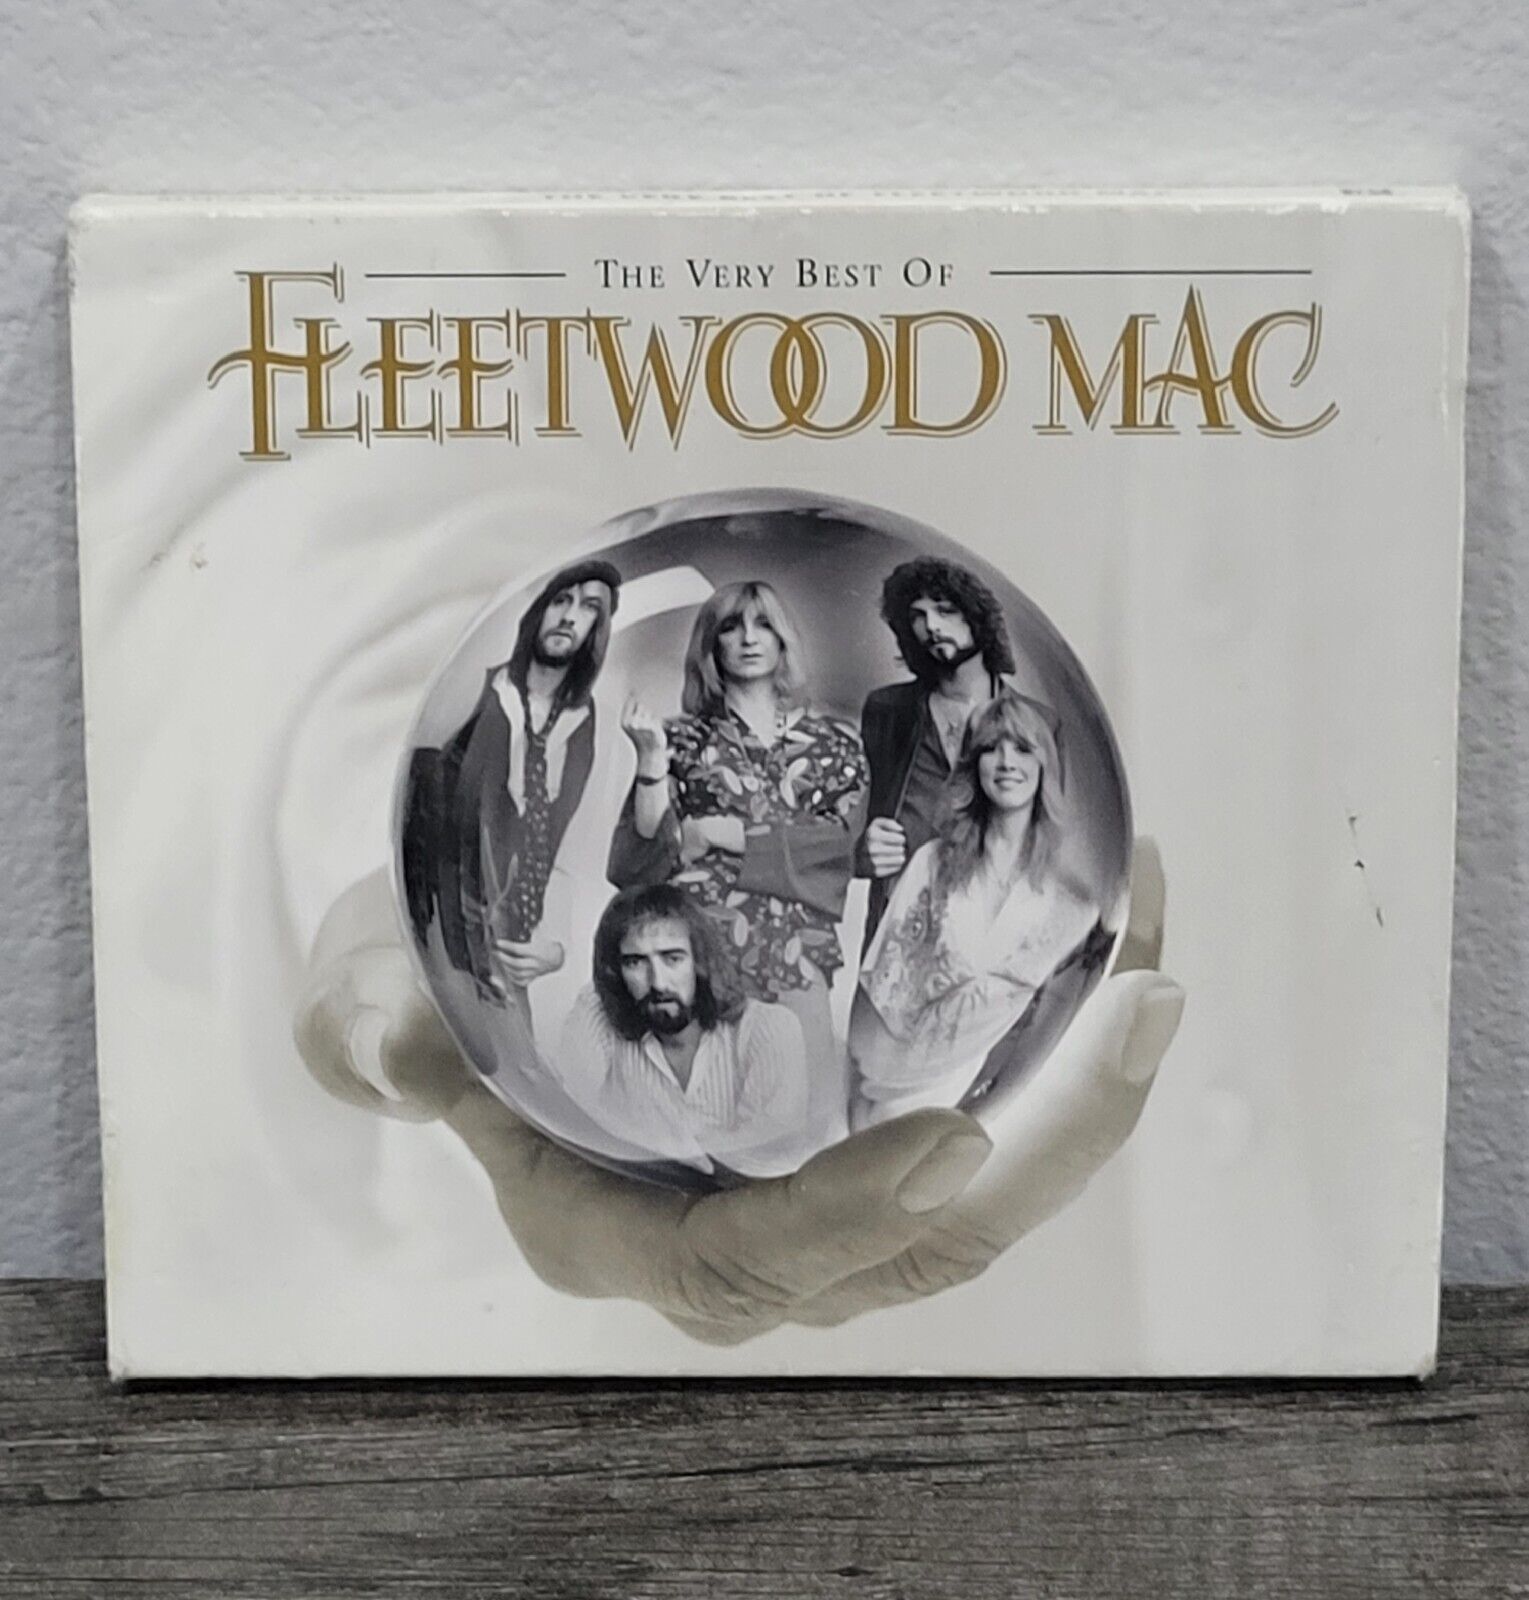 The Very Best of Fleetwood Mac by Fleetwood Mac (CD, 2002) 2 Disc Set